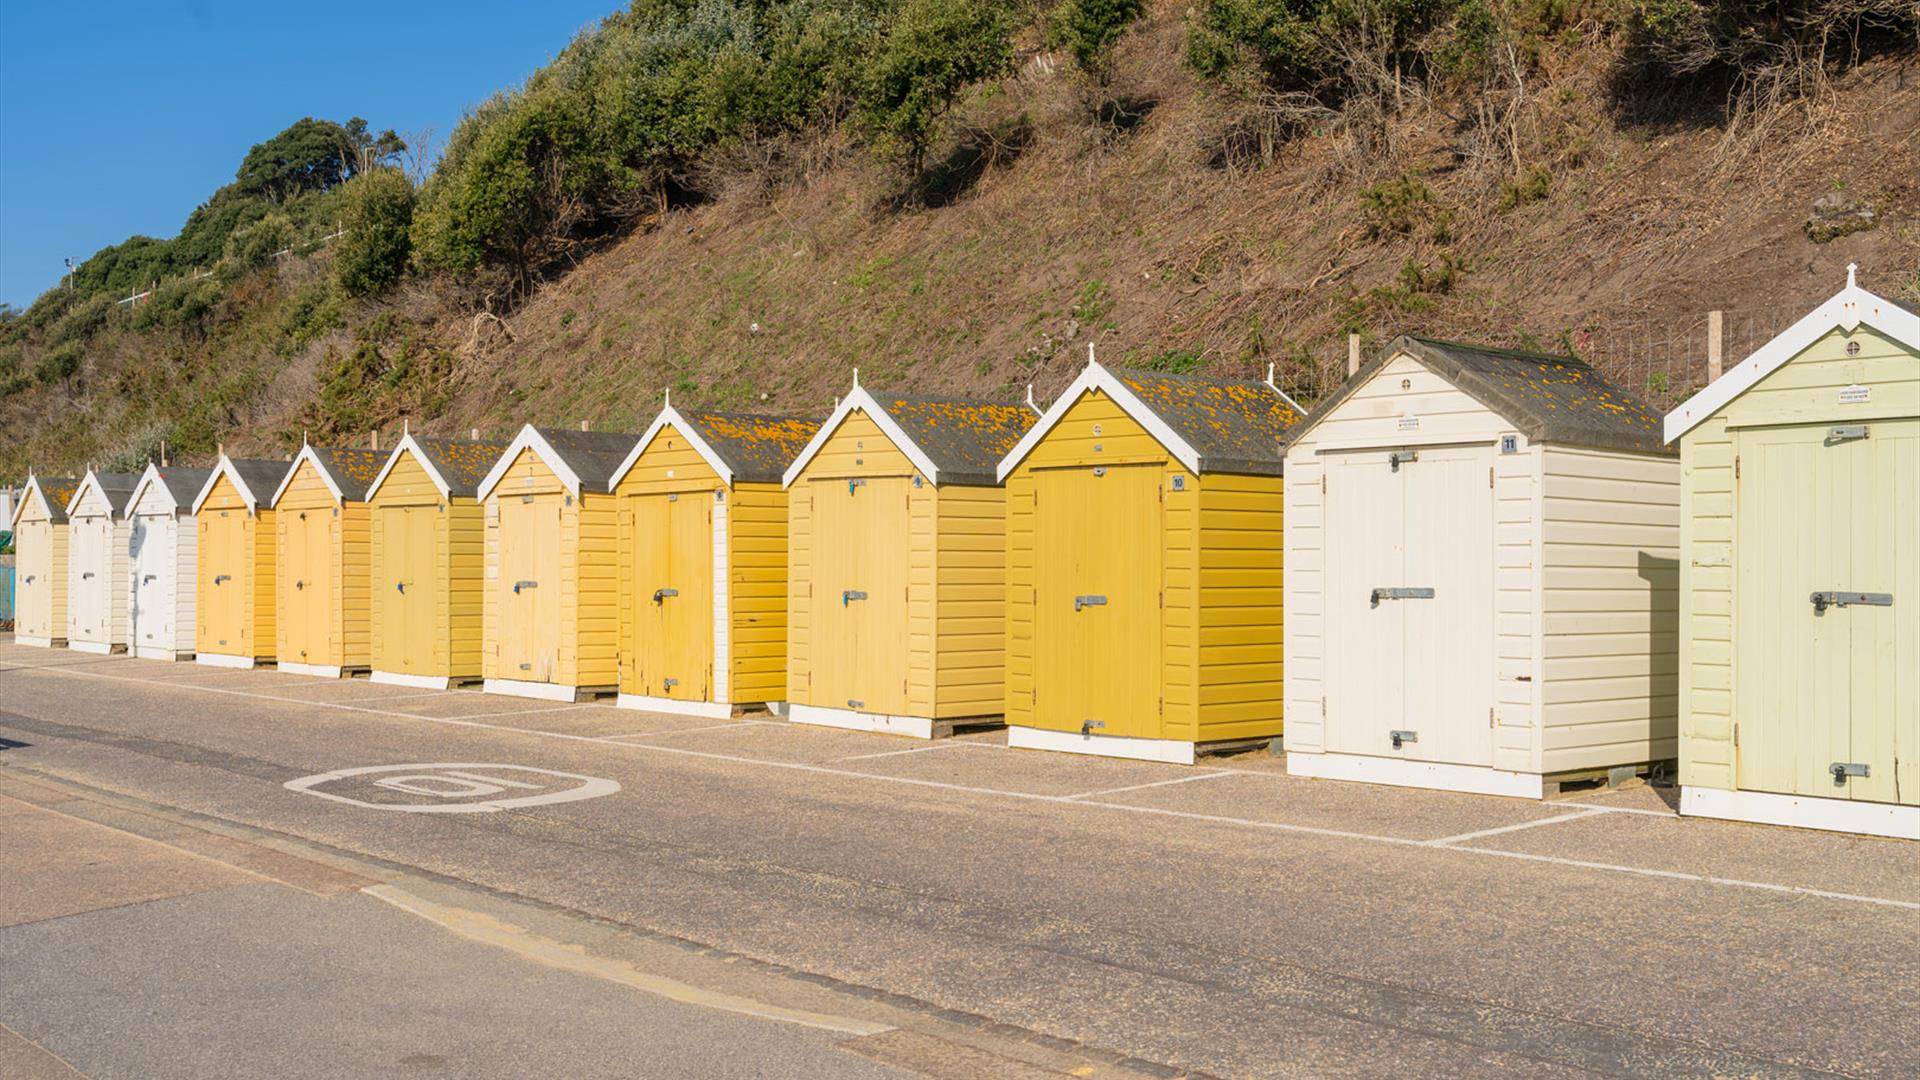 Row of Yellow beach huts basking in the sun